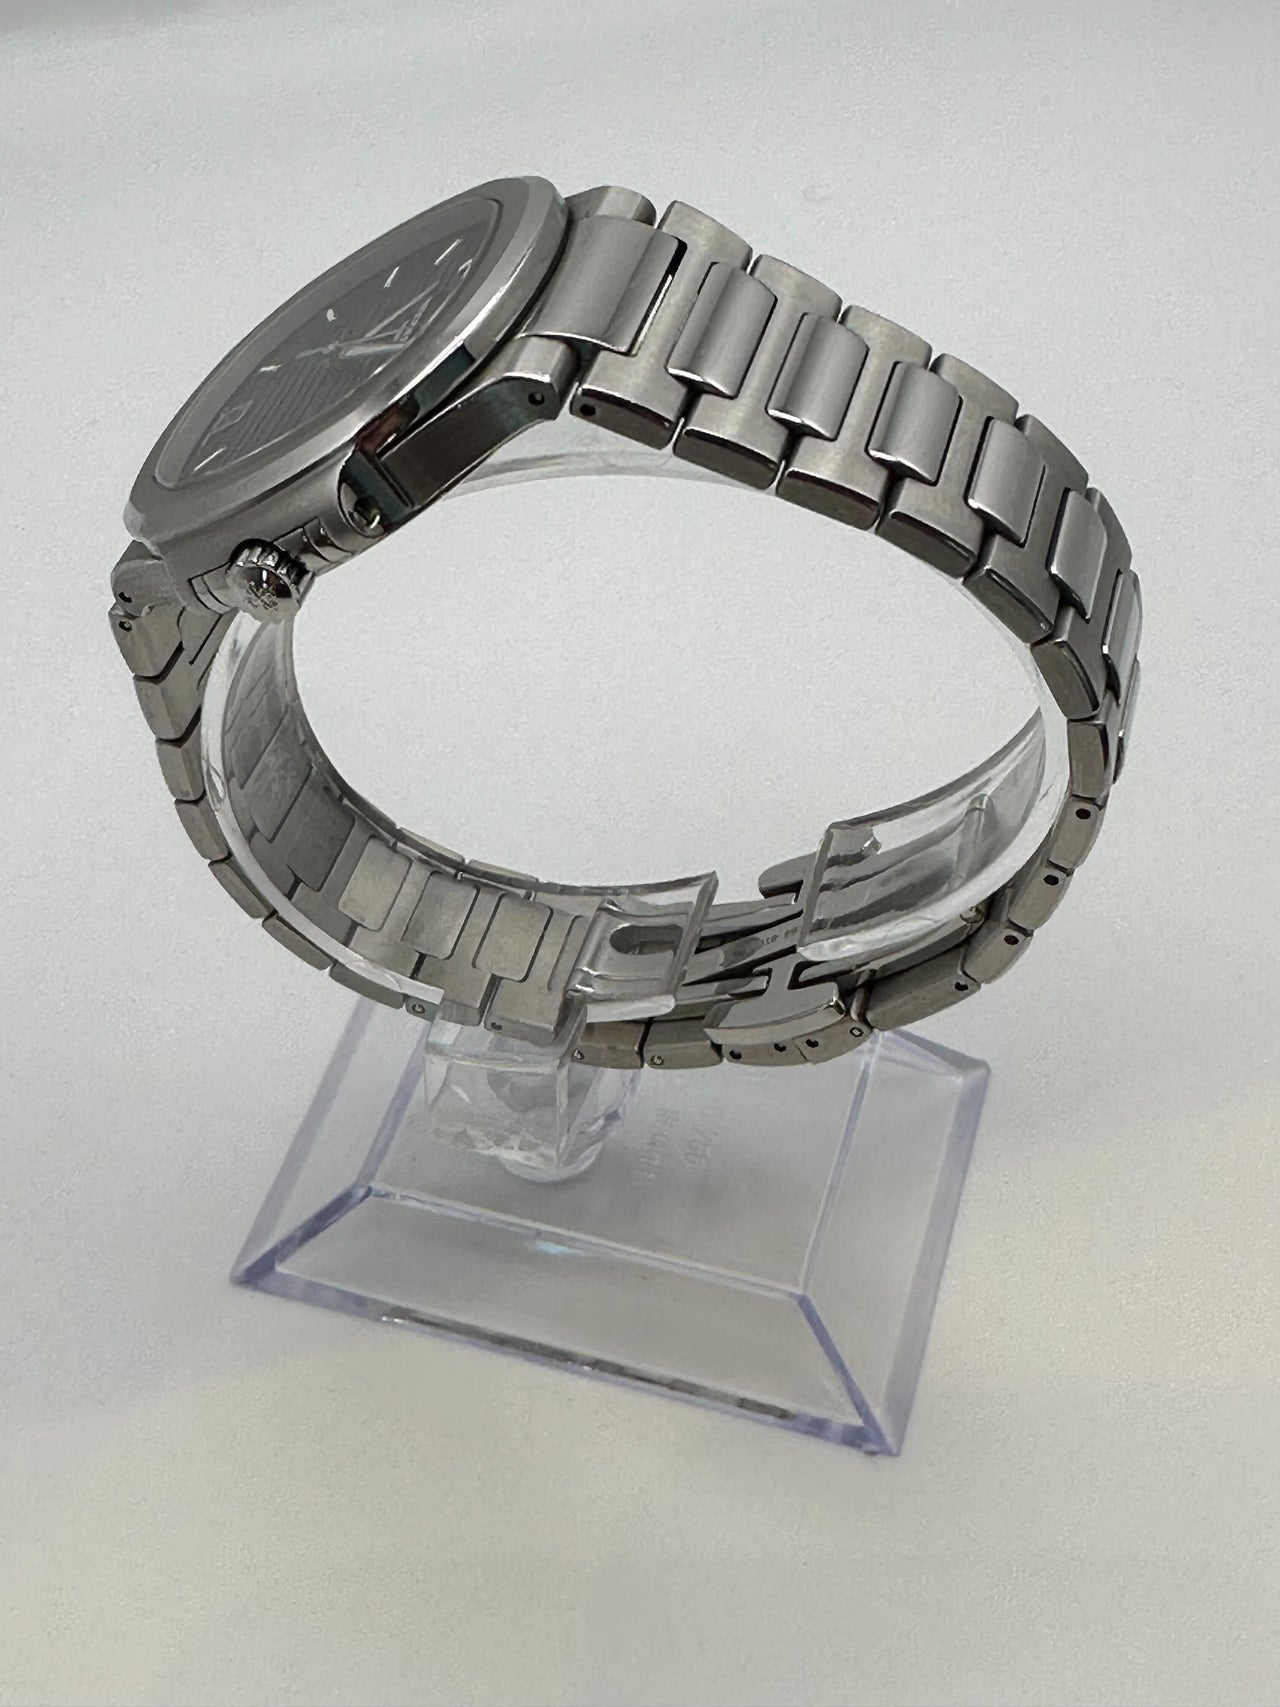 Luxury Watch Patek Philippe Nautilus 7118/1A-001 'Ladies' Stainless Steel Blue Dial Wrist Aficionado